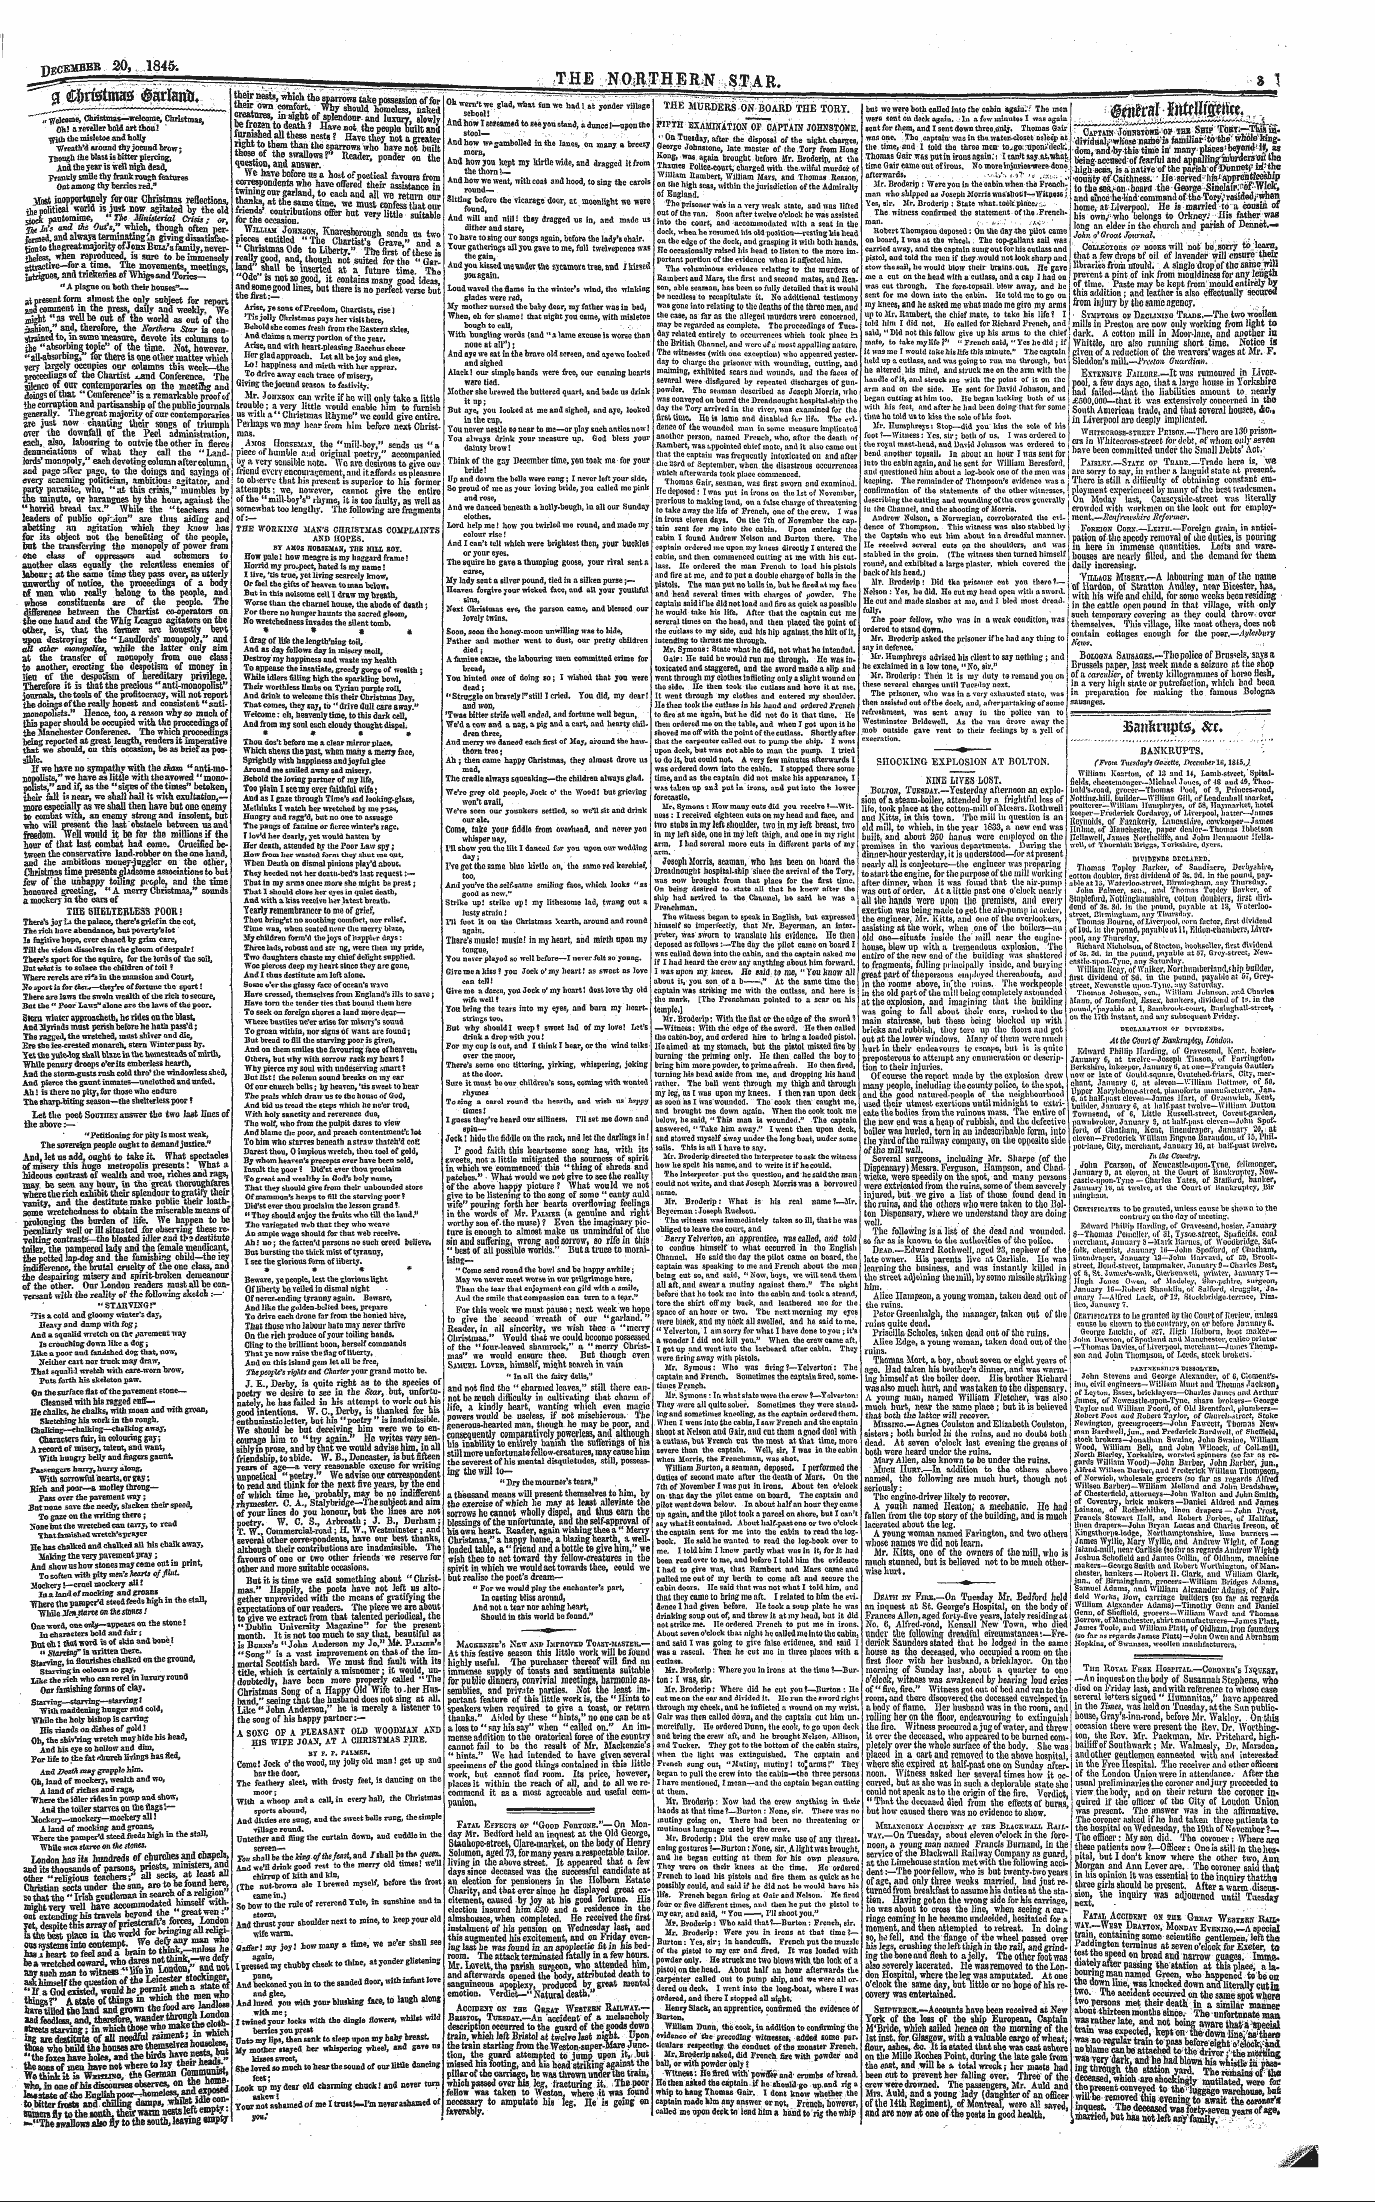 Northern Star (1837-1852): jS F Y, 4th edition: 3